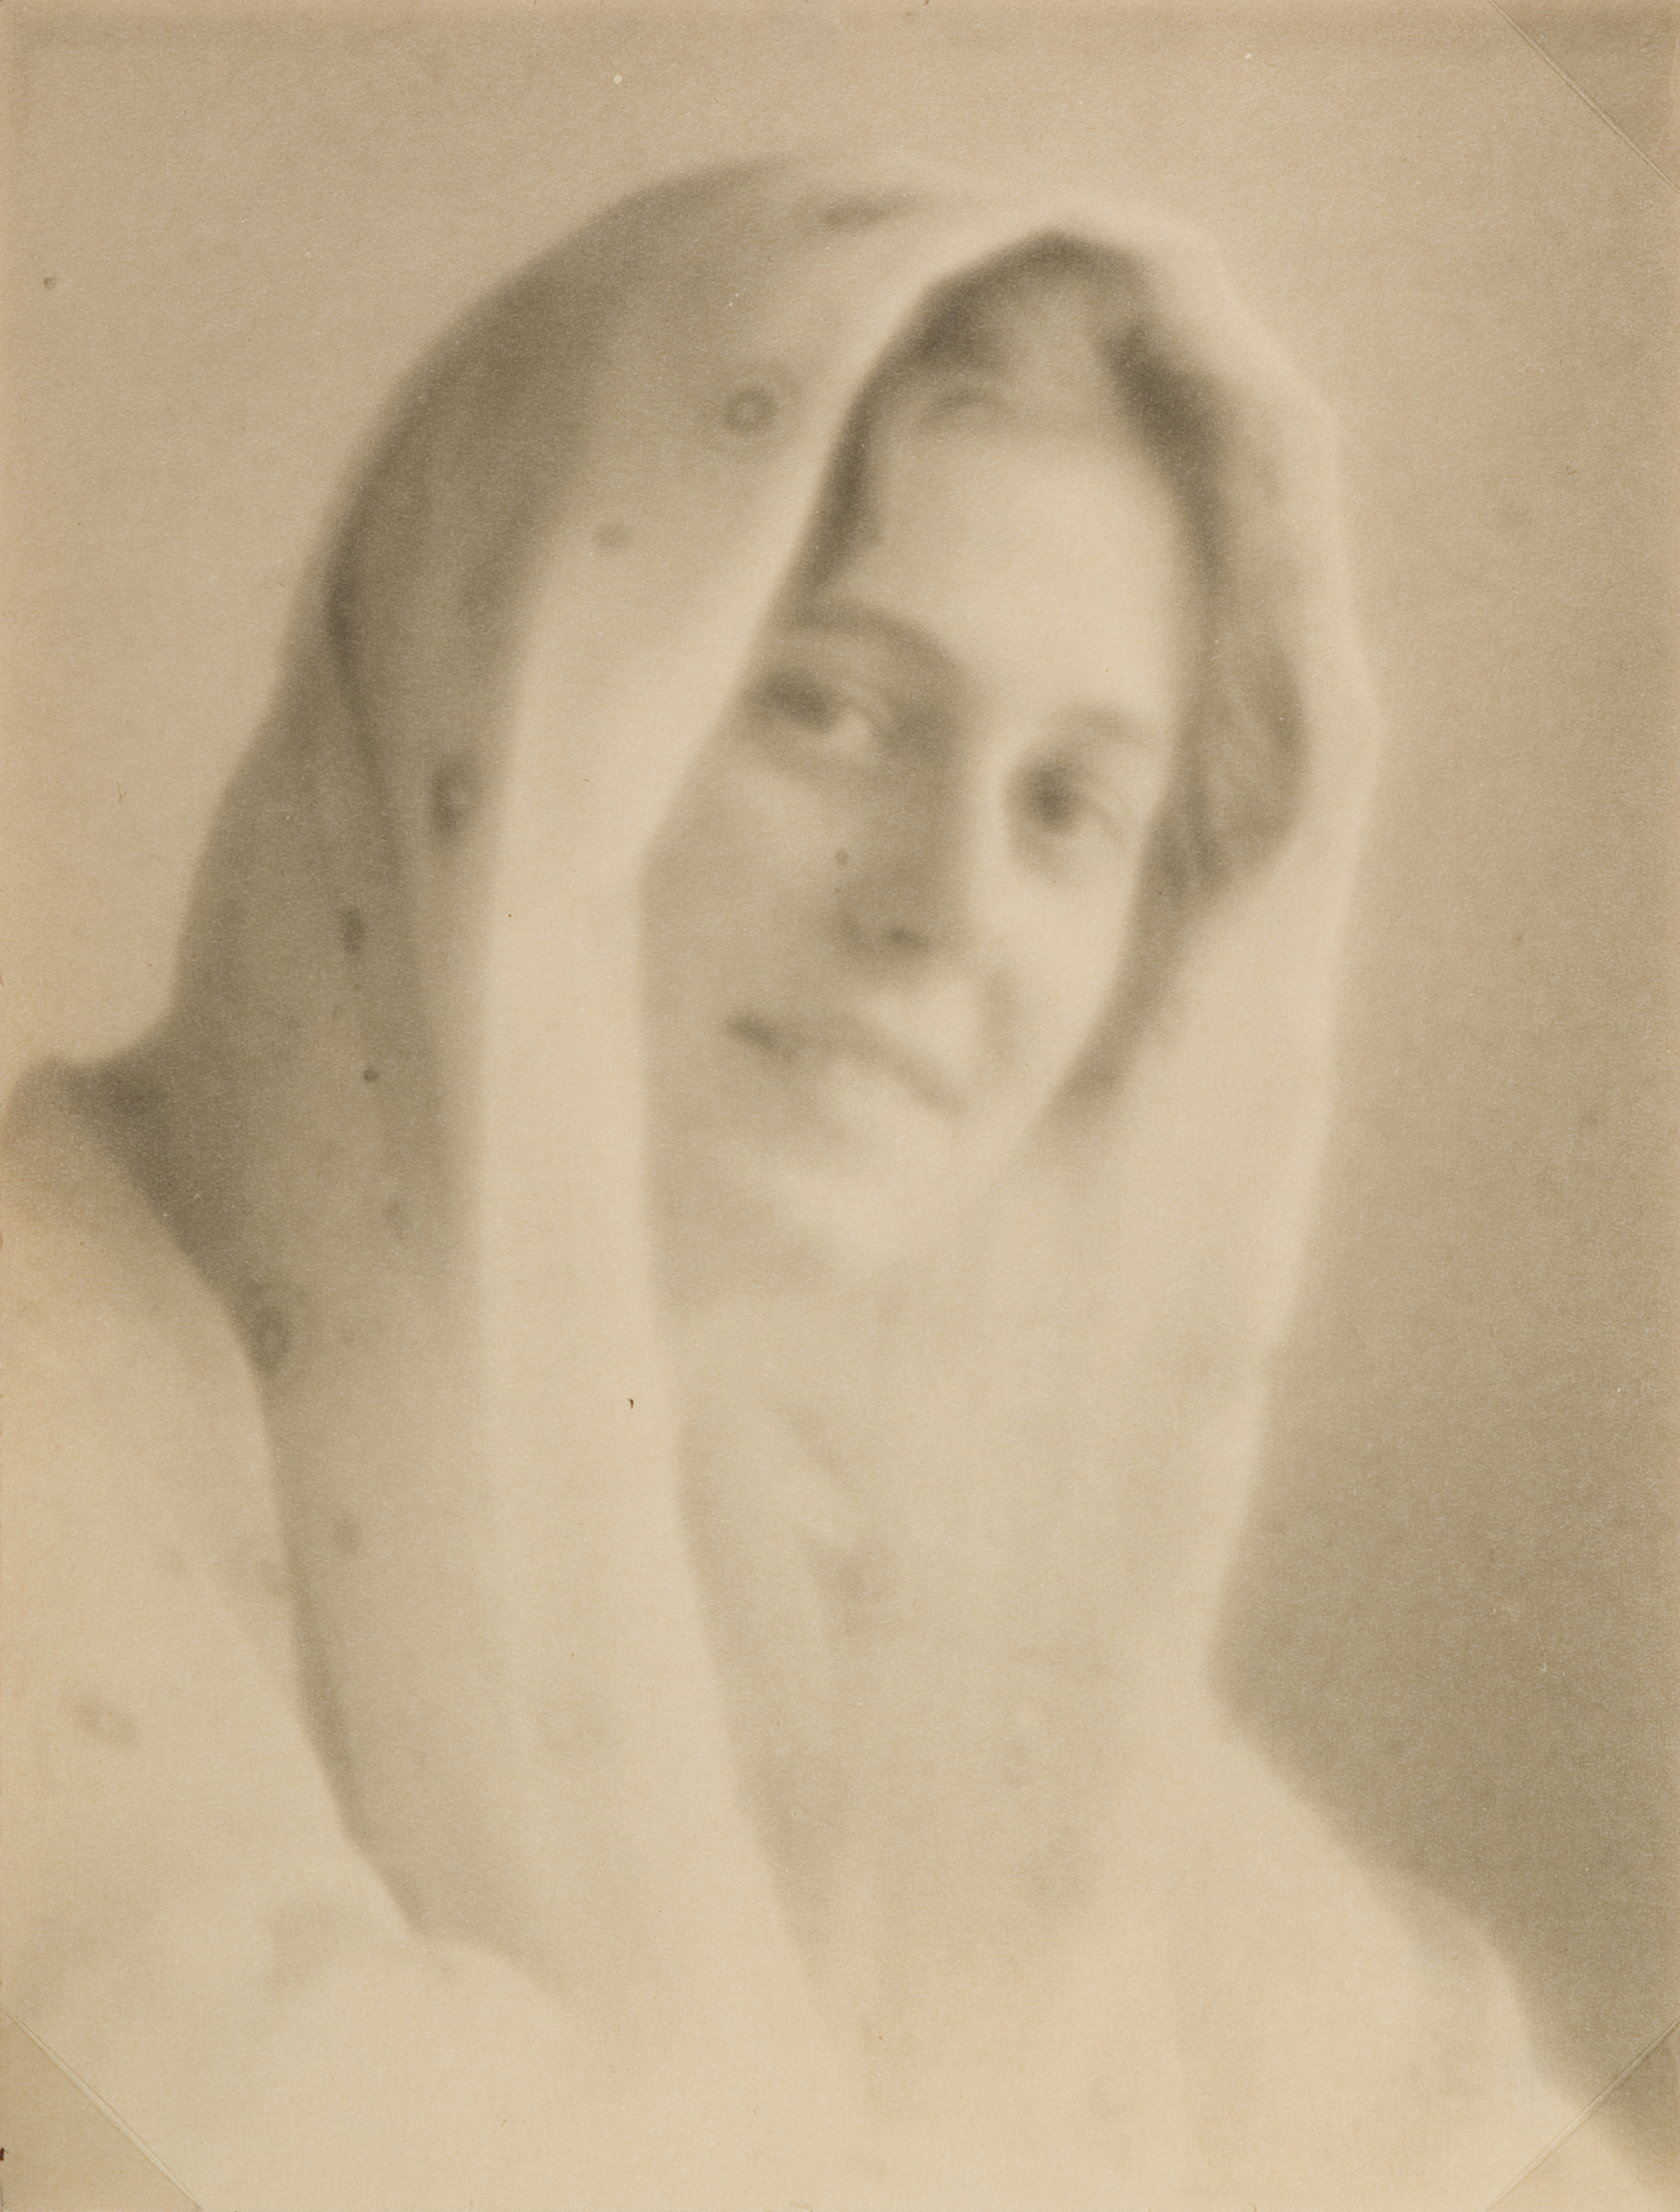 Gladys Shields, scarf draped on head